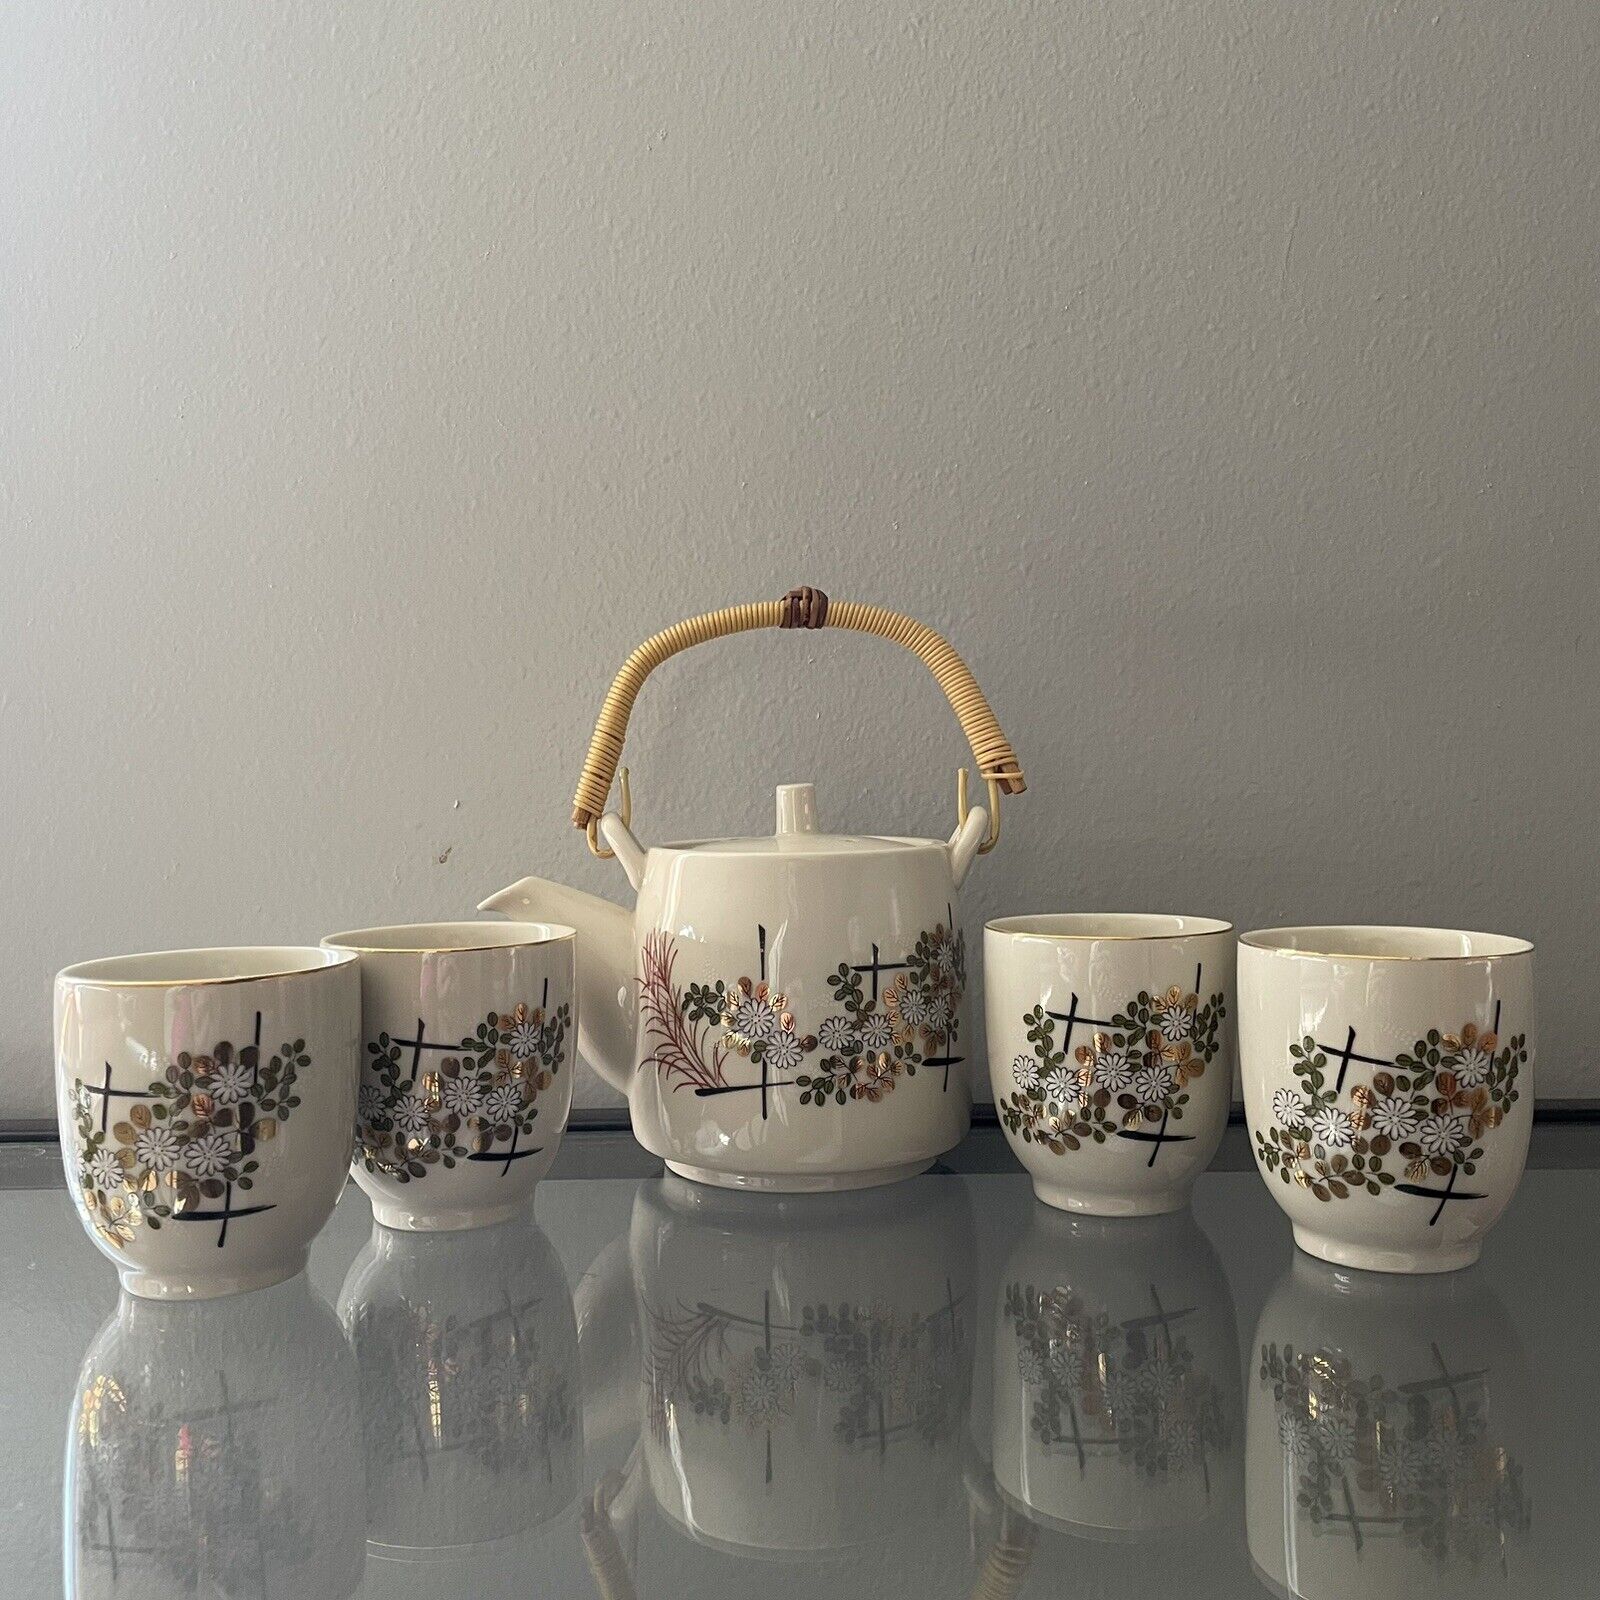 Tea Pot With Wicker Handle & Set of 4 Cups Kitchen Teapot Decor Antique